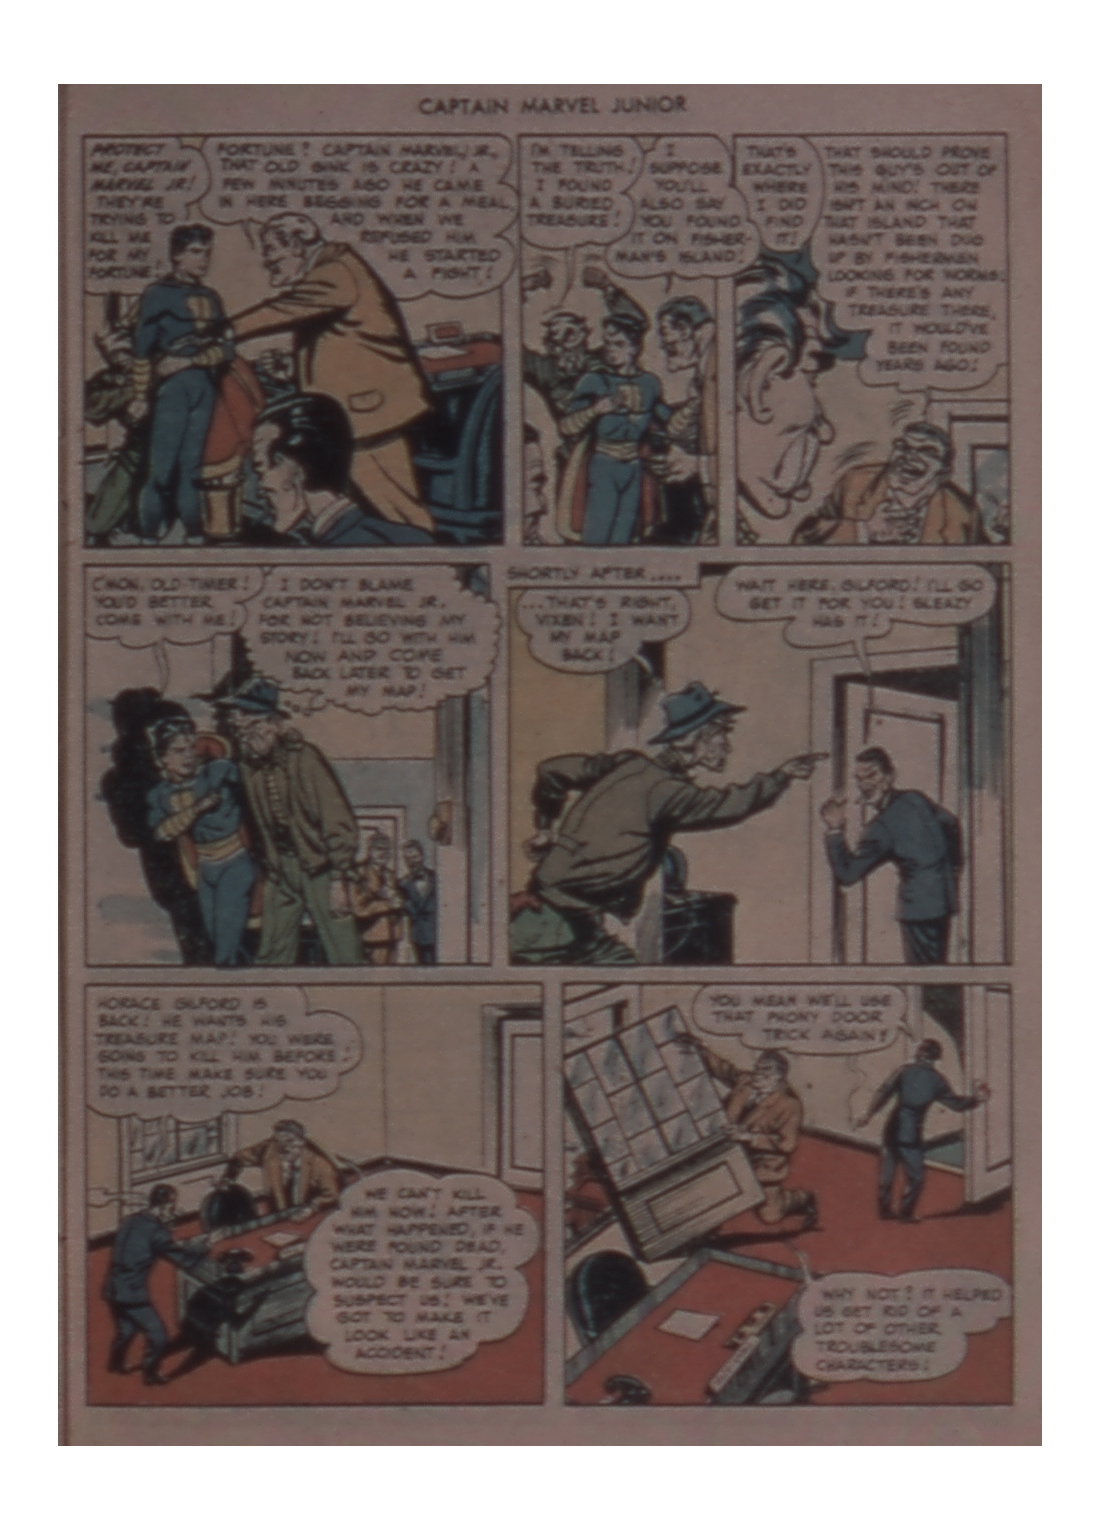 Read online Captain Marvel, Jr. comic -  Issue #73 - 21